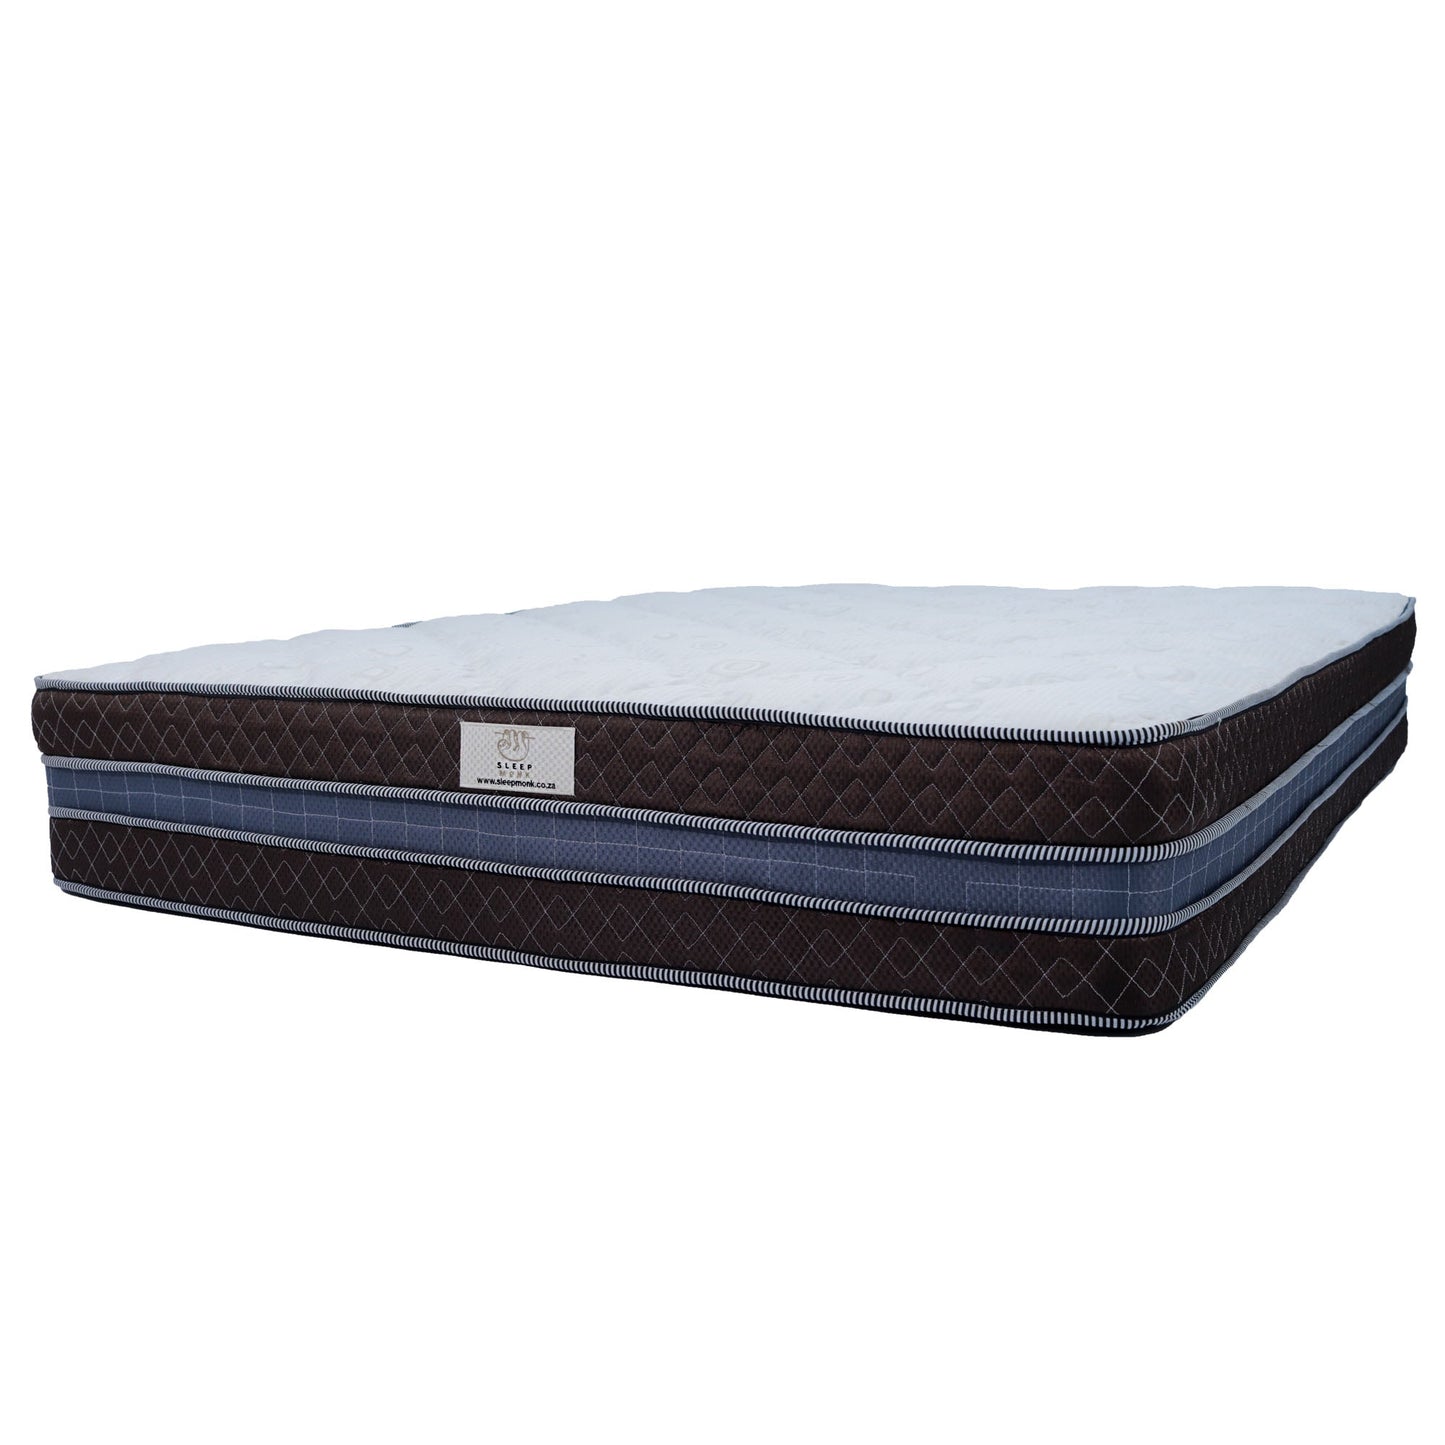 Premium EuroTop Classic Three Quarter Mattress - Premium Bed from SLEEPMONK - Just R 4500! Shop now at SLEEPMONK